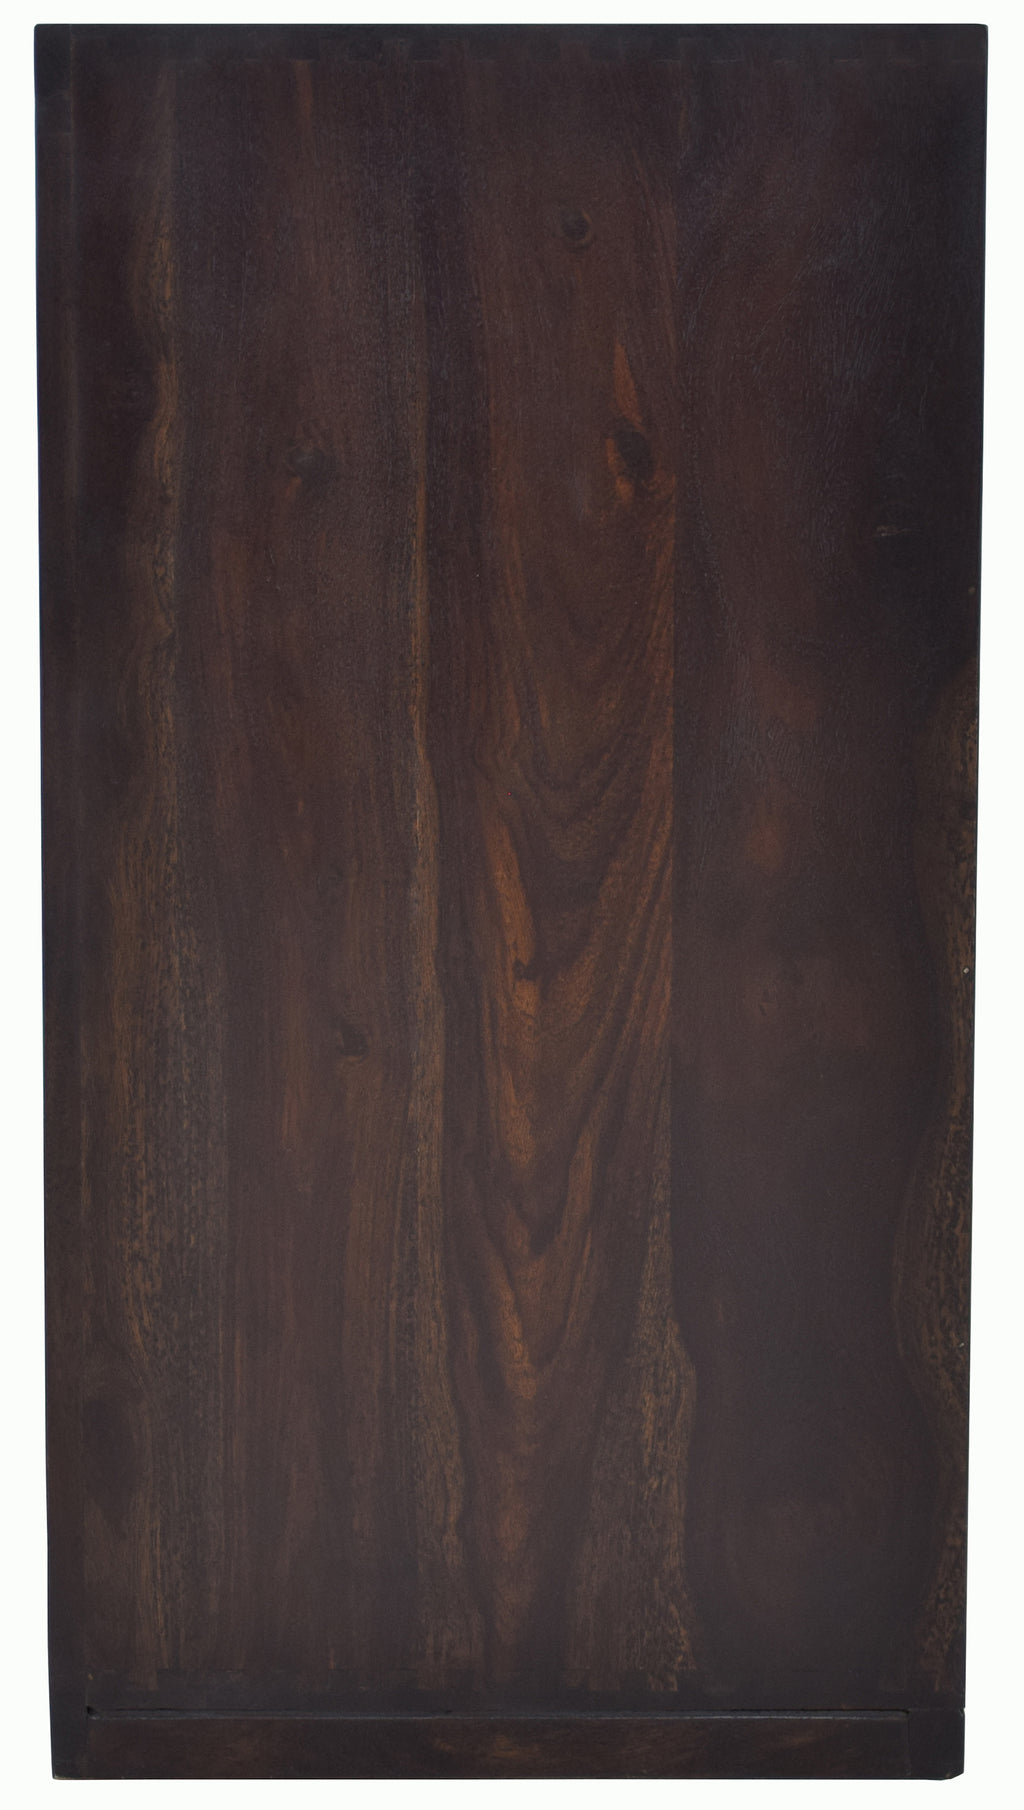 Timbertaste Sheesham Solid Wood Pinku Dark Walnut Finish Side Board Cabinet, sheesham wood cabinet, storage stand, wooden side board, fish tank stand, book shelf, Teak Finish, walnut finish